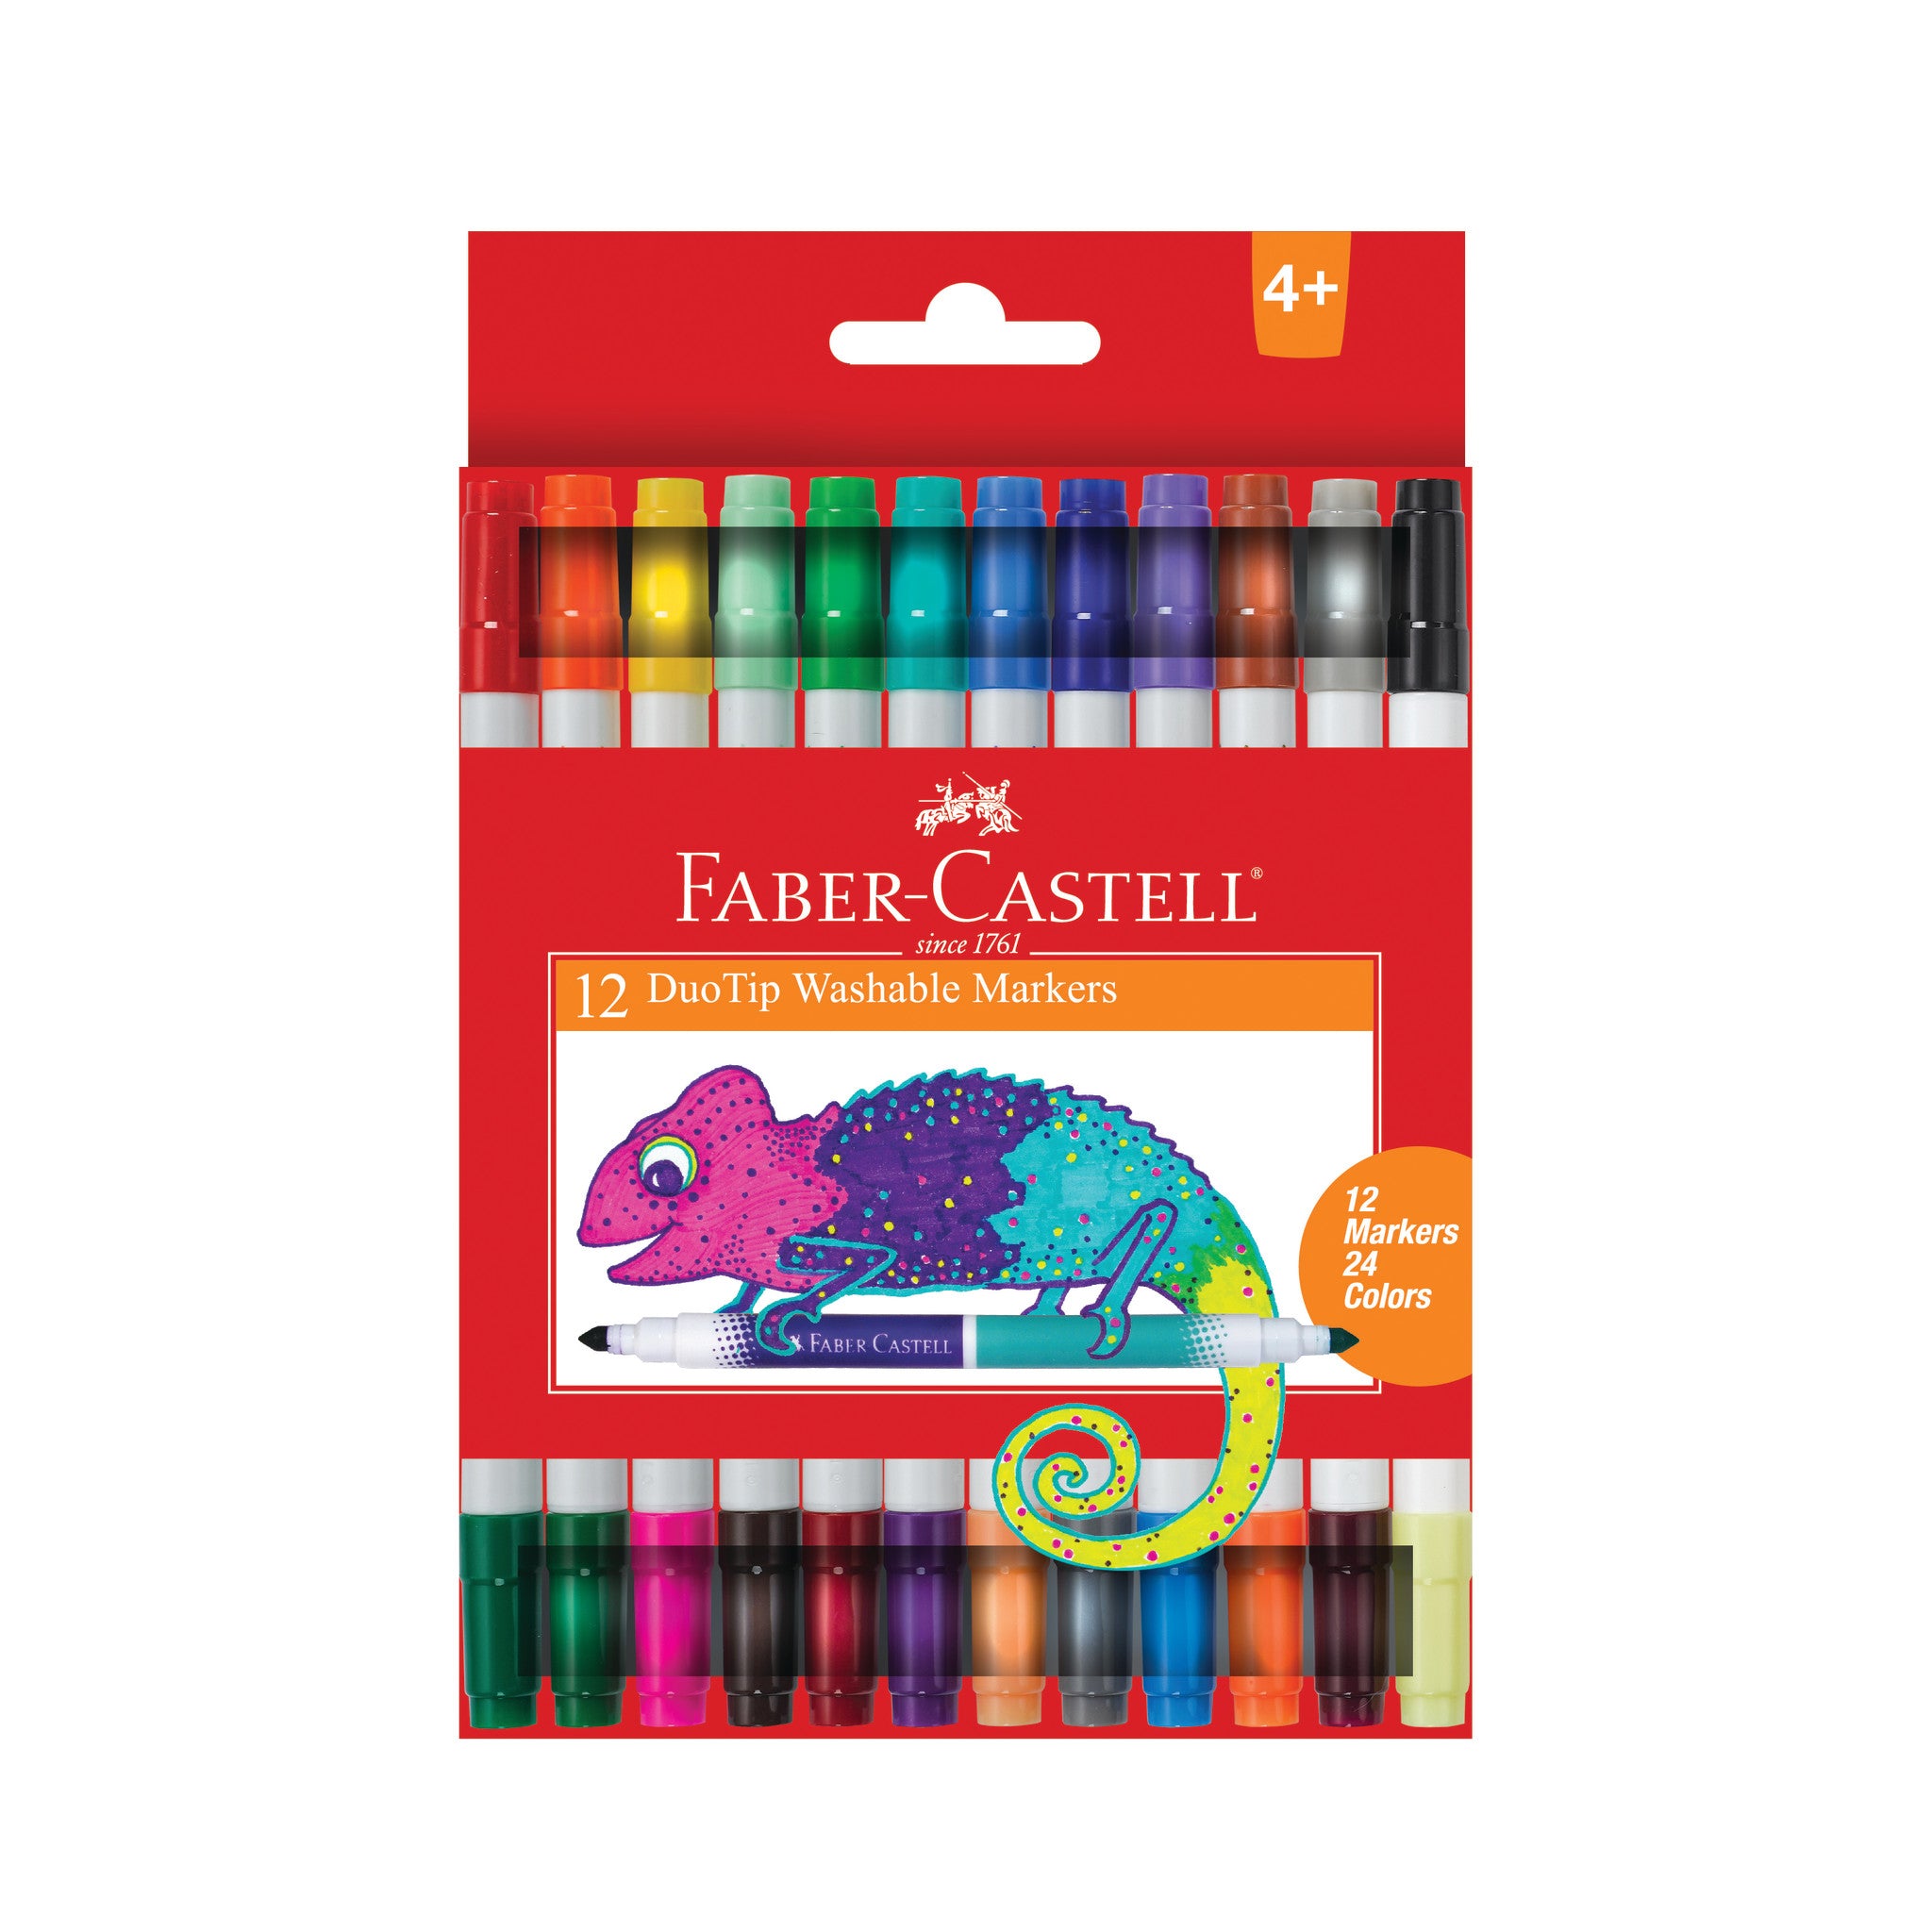 Faber-Castell Back to School Supplies Set - 12 DuoTip Markers, 12 Colored  Ecopencils, Child Safe Scissors & Grip Trio Sharpener (Sharpener Color May